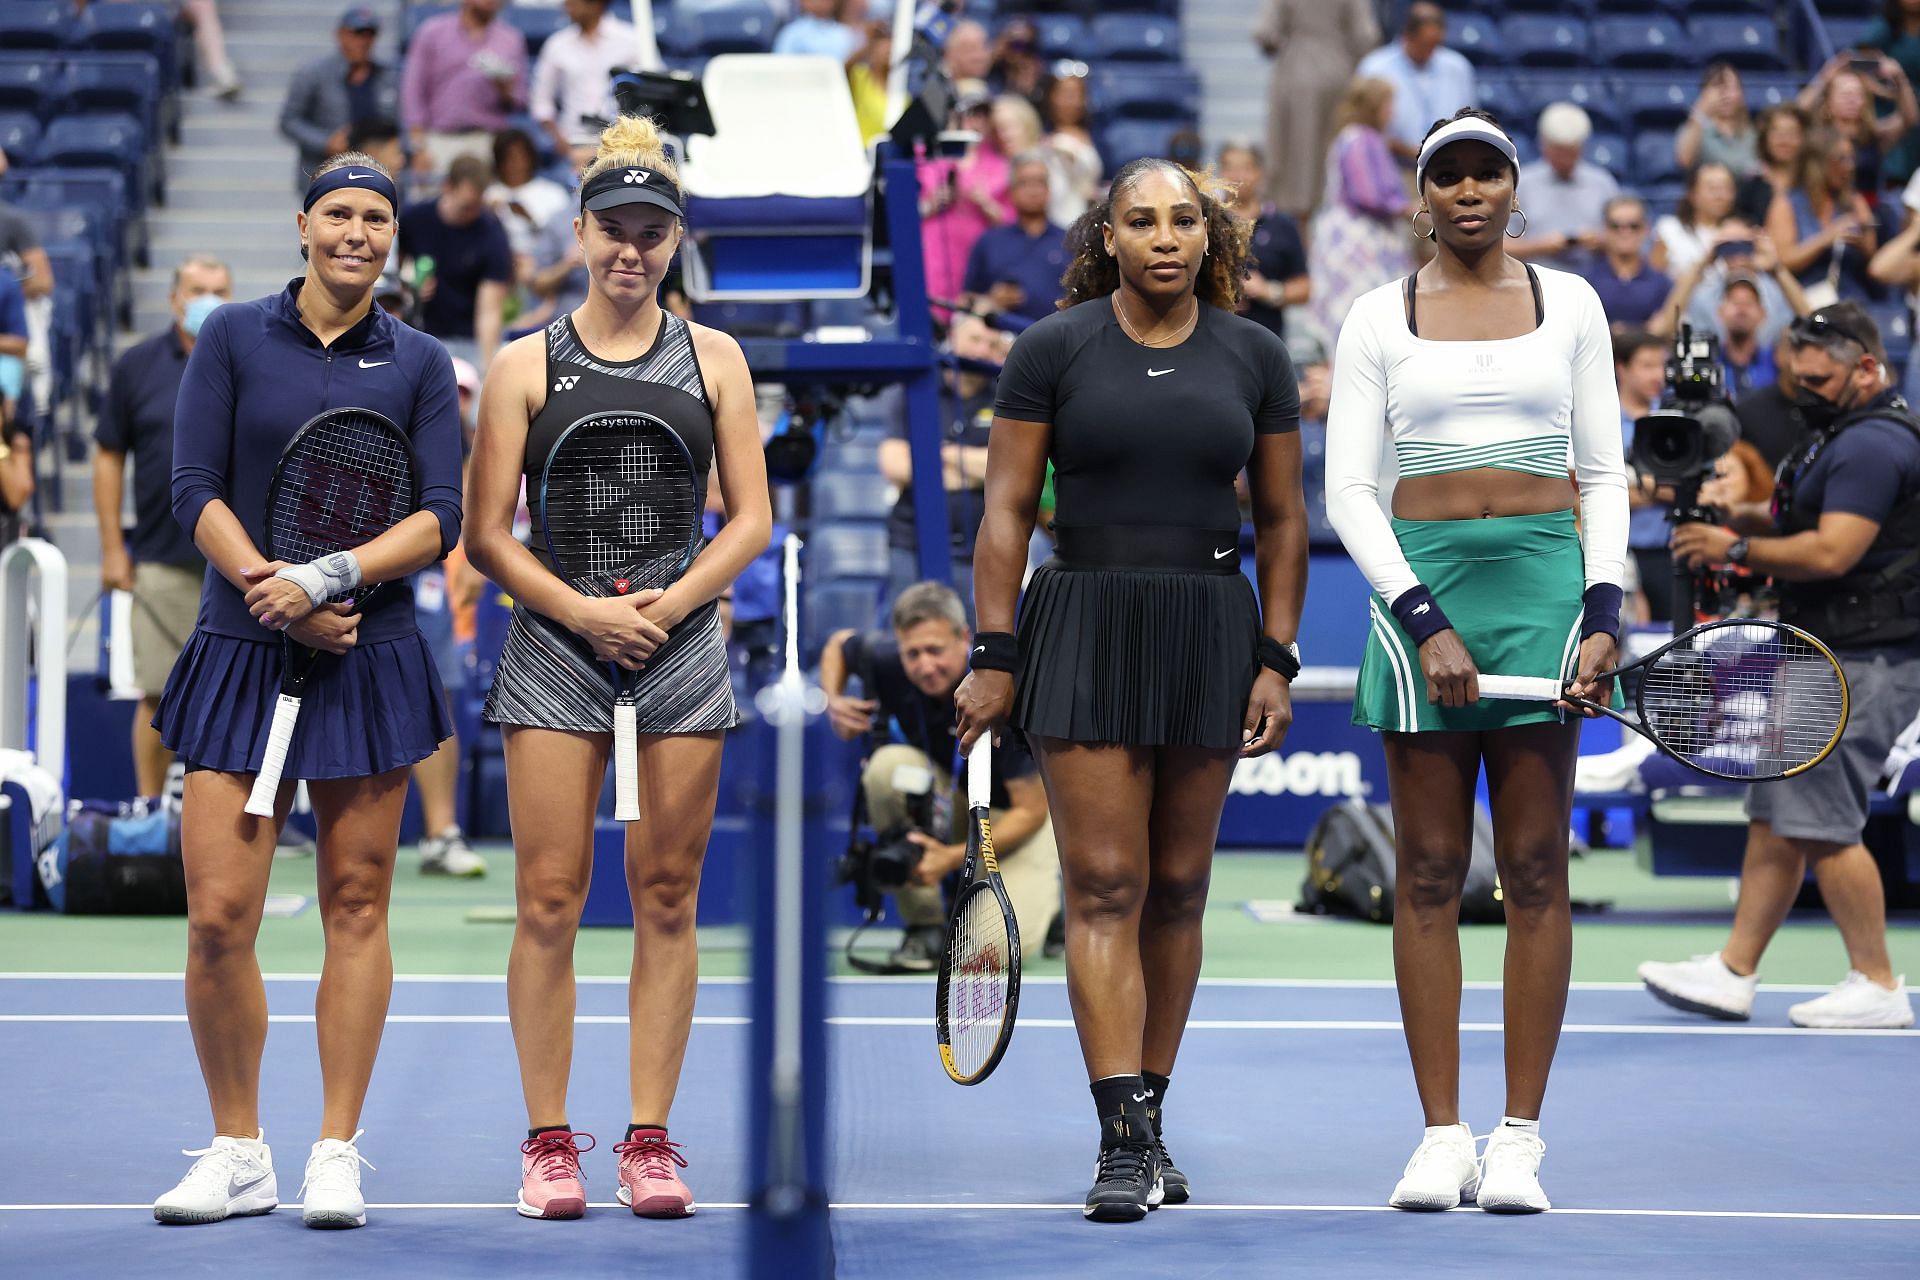 L-R: Lucie Hradecka, Linda Noskova, Serena Williams, and Venus Williams